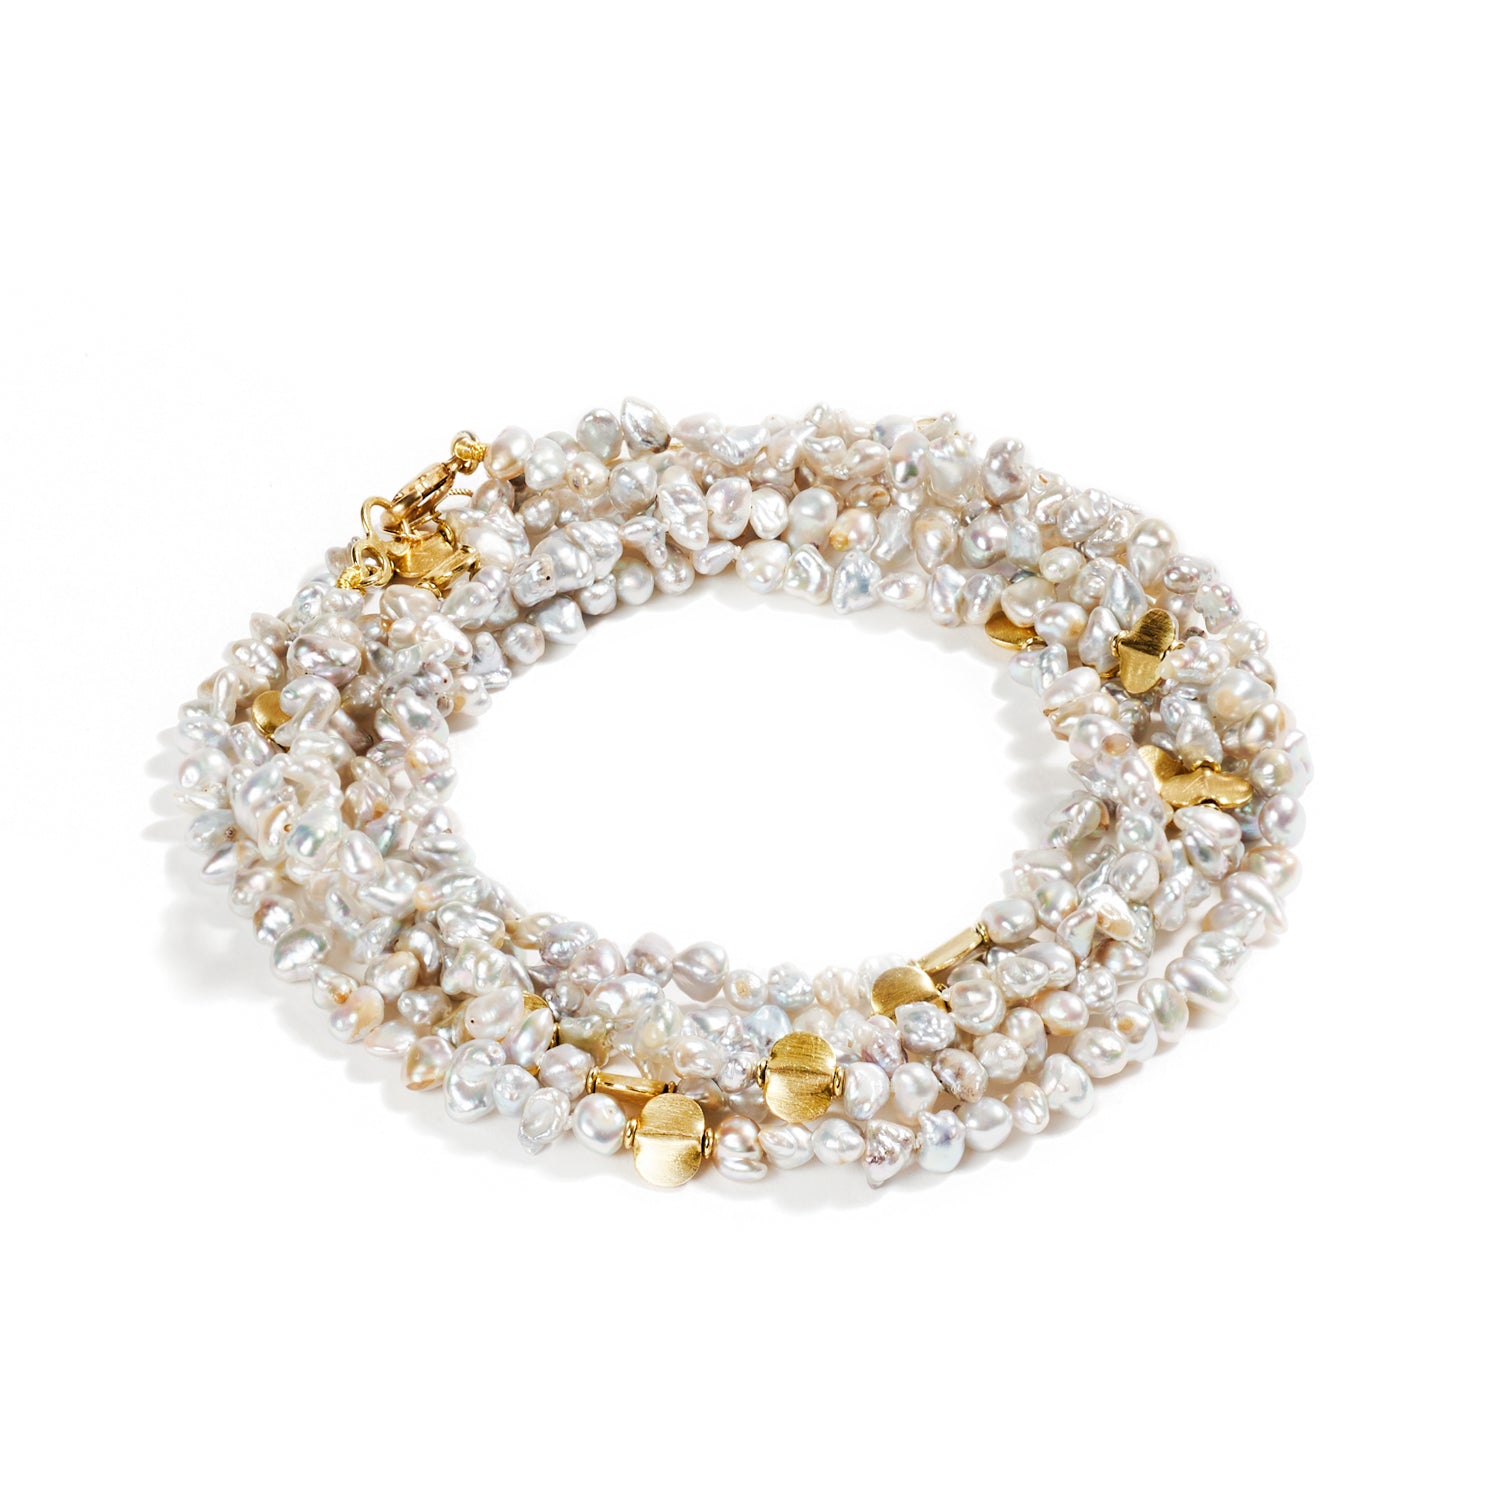 Akoya Pearl Bead Necklace/Bracelet